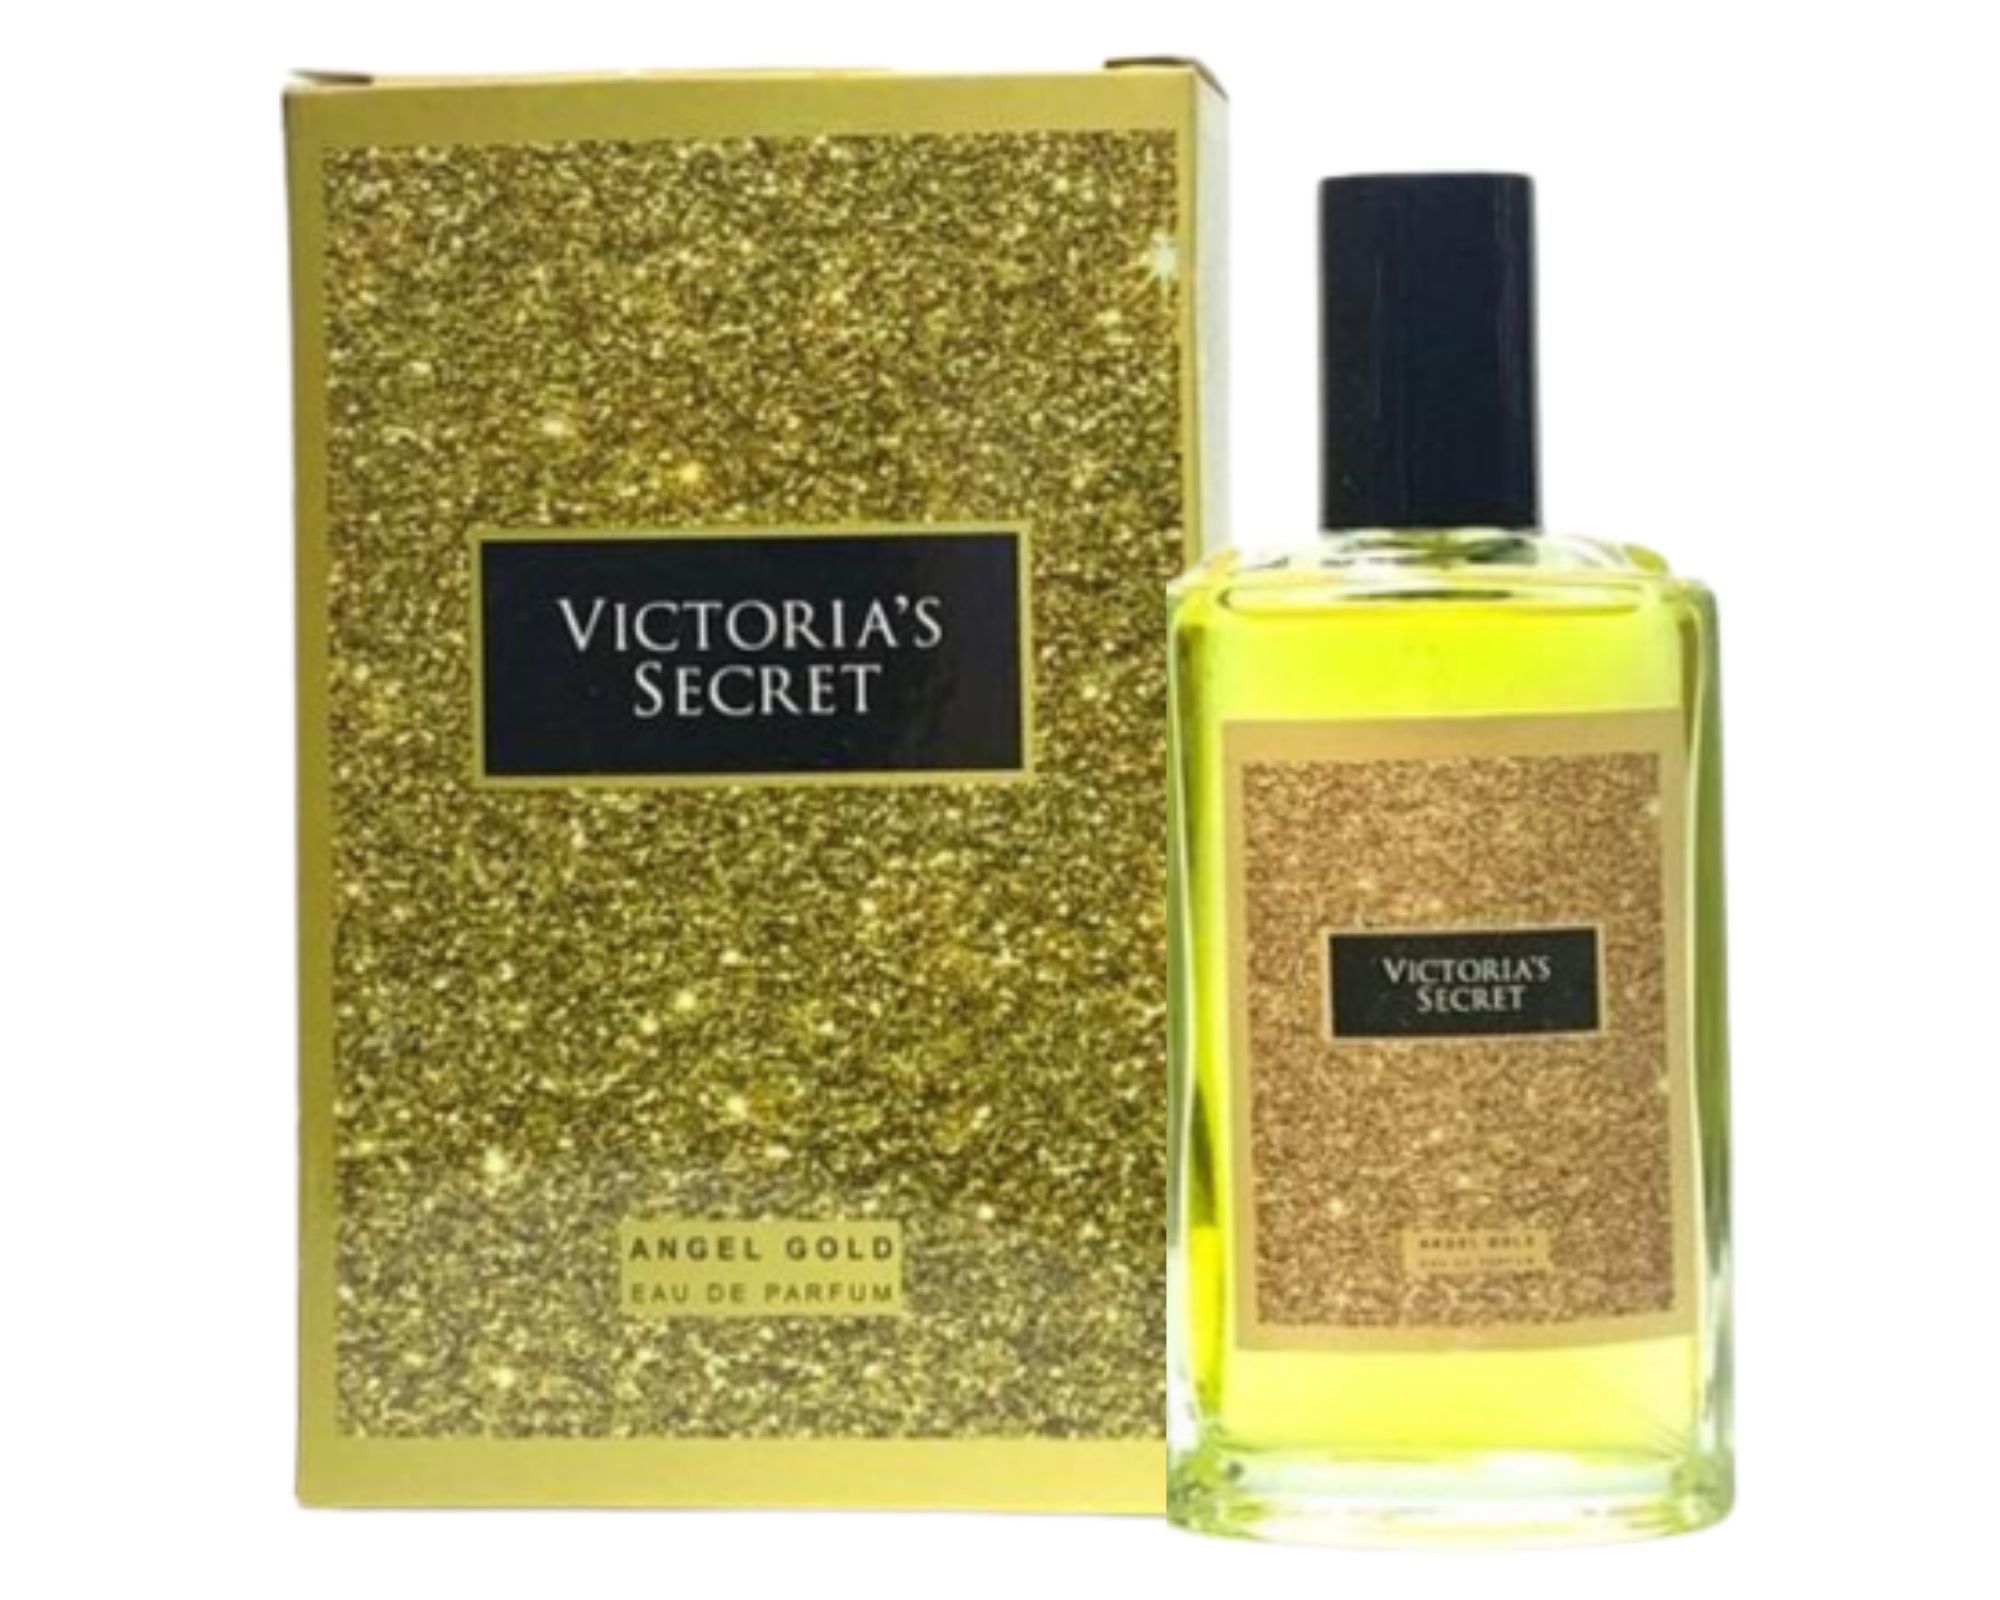 Perfume Capilar Victoria's Secret Angel Gold 100ml